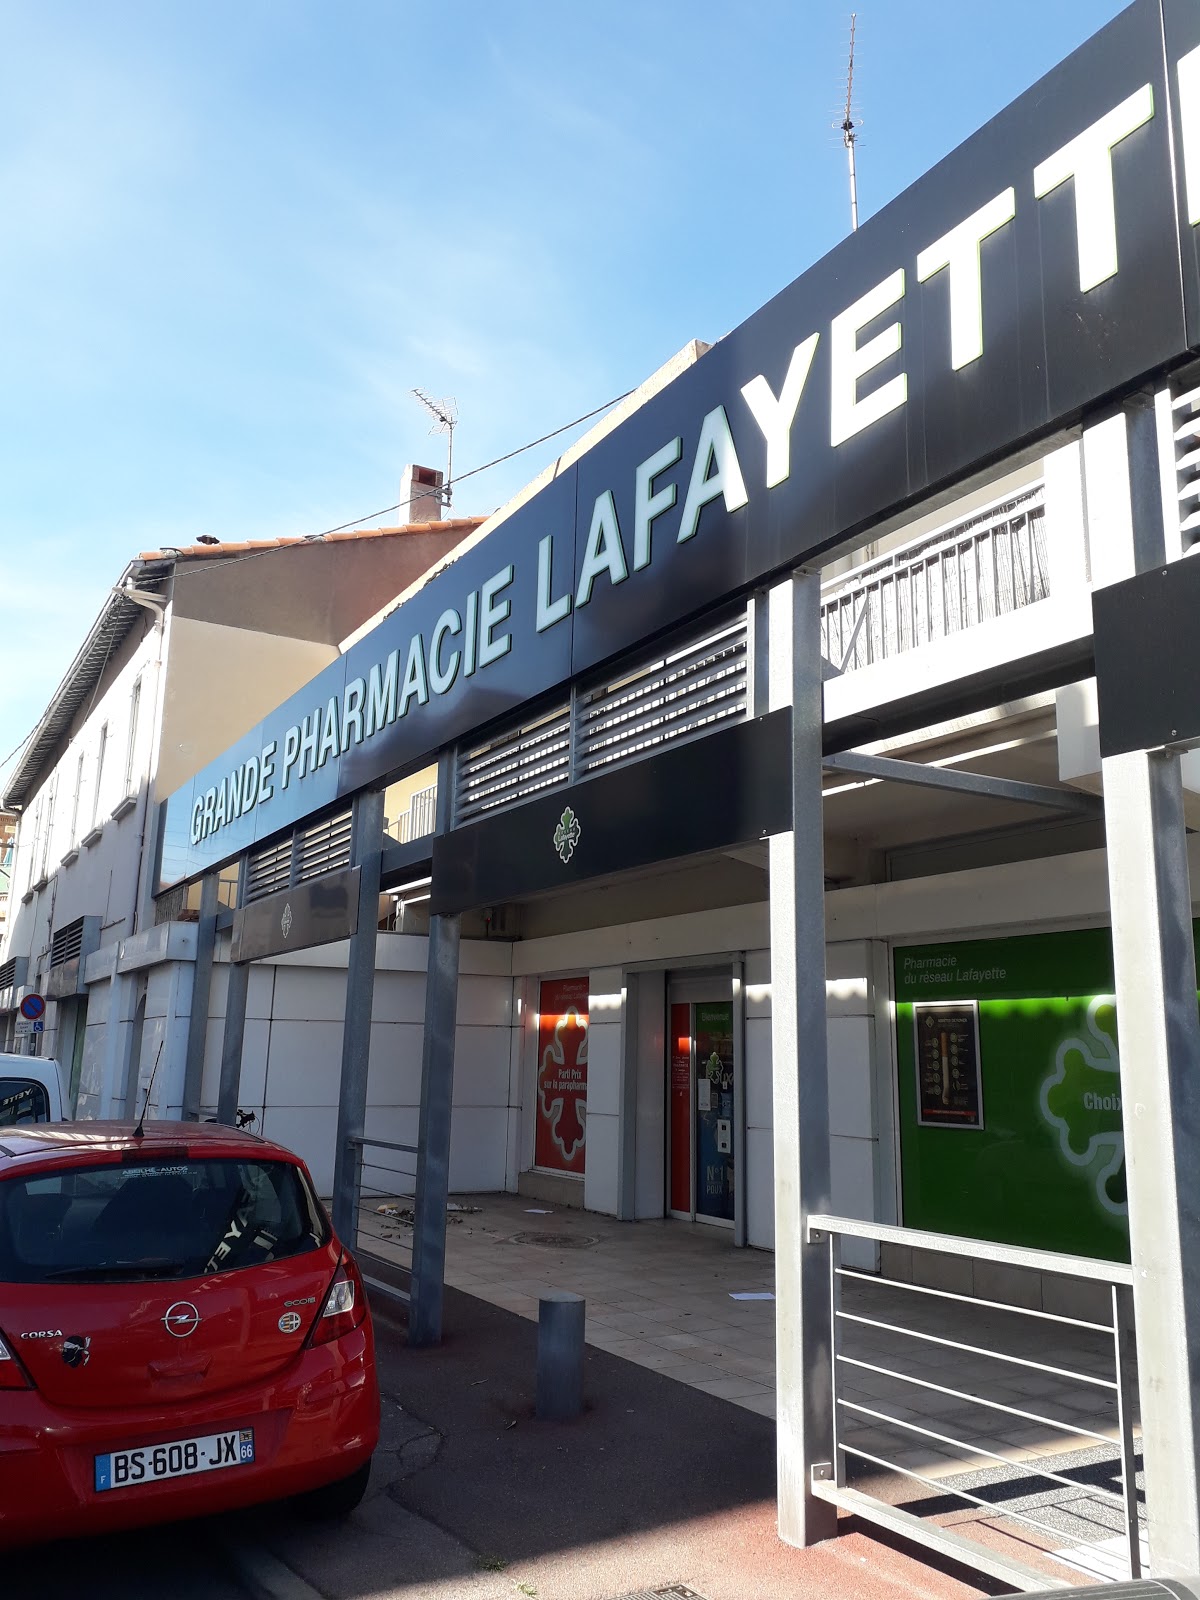 Grande Pharmacie Lafayette de Catalogne